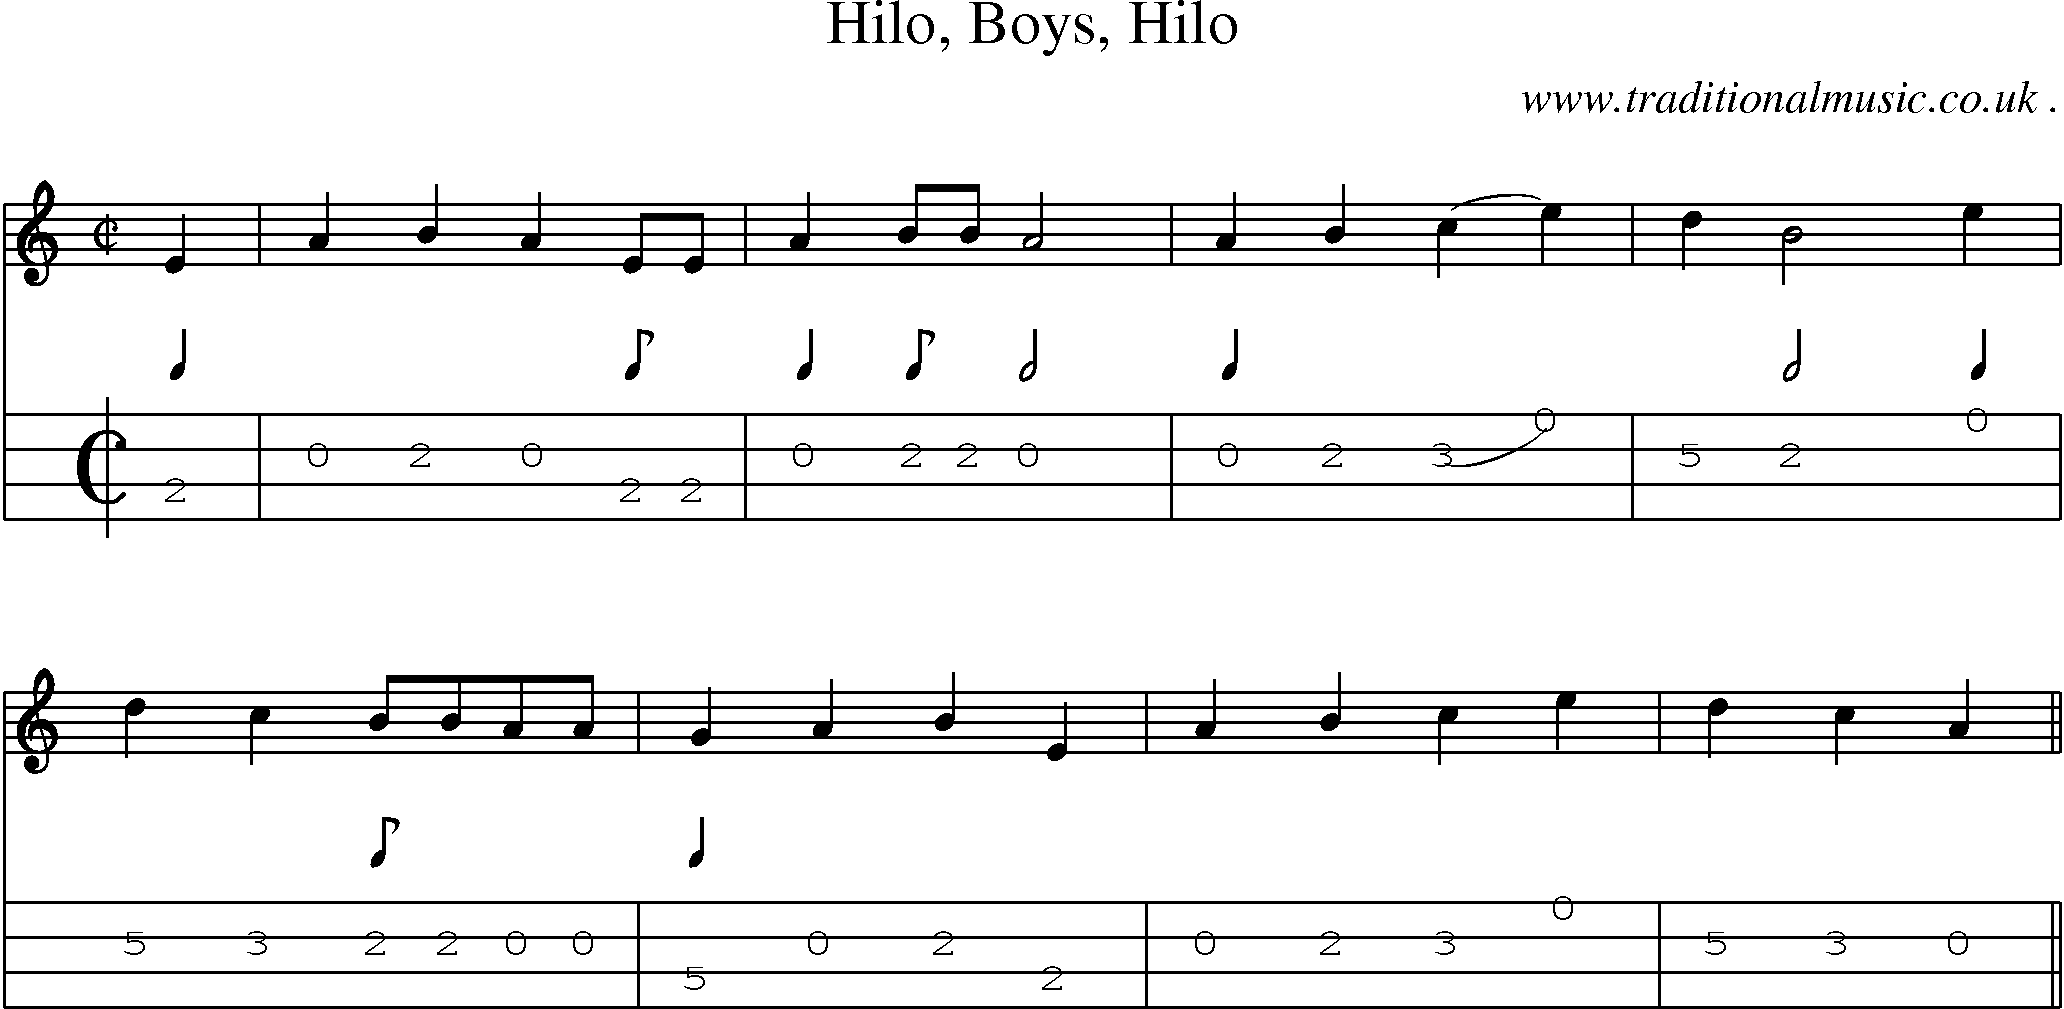 Sheet-Music and Mandolin Tabs for Hilo Boys Hilo